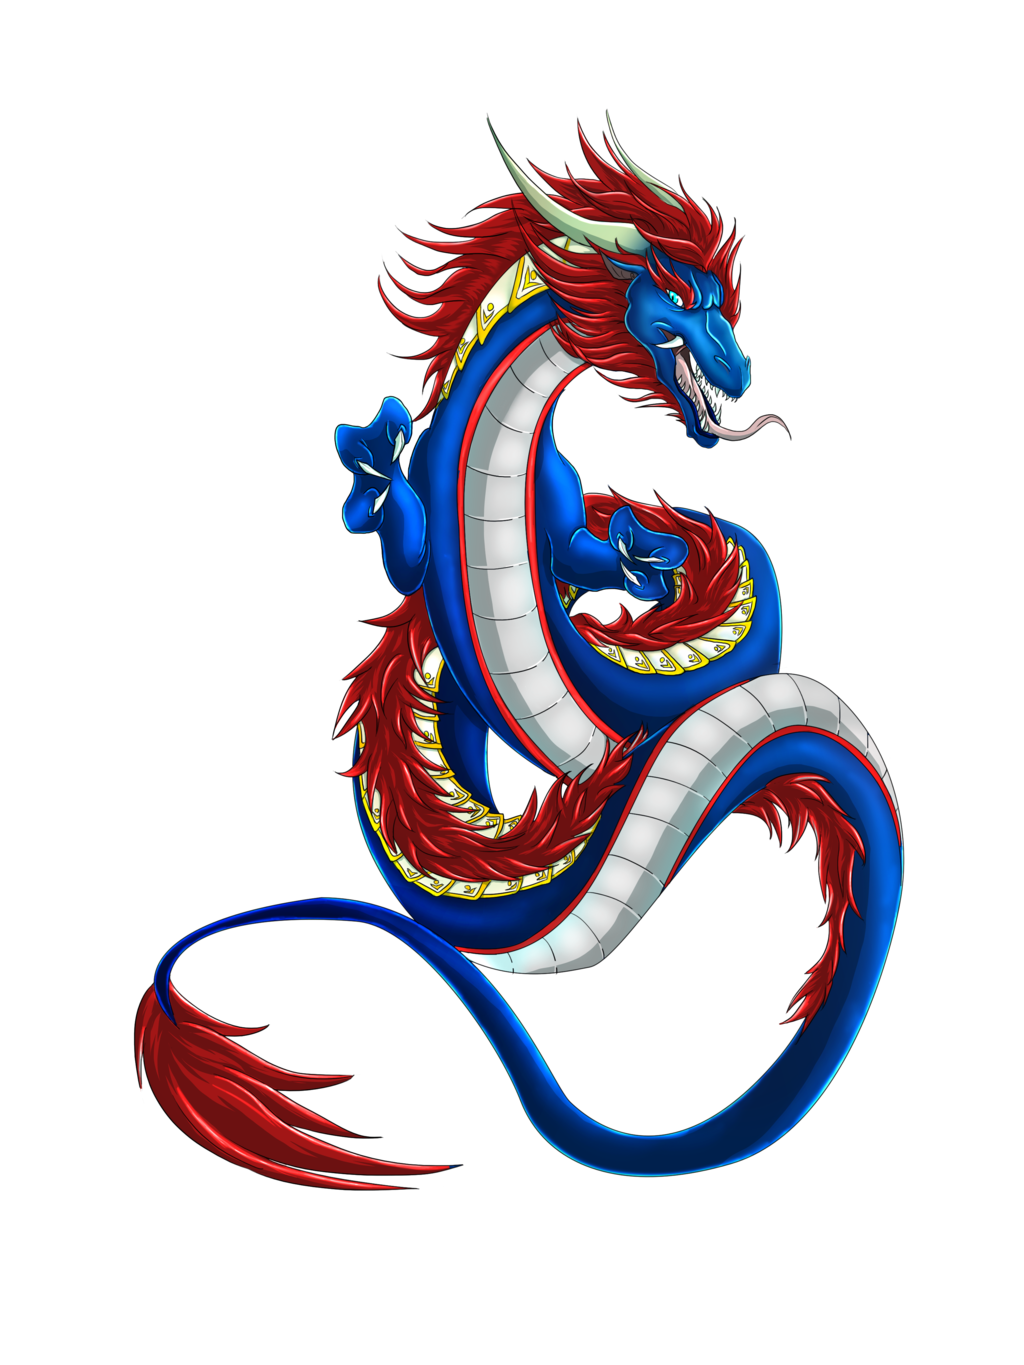 Source Url Kootation Chinese Dragon Black Html